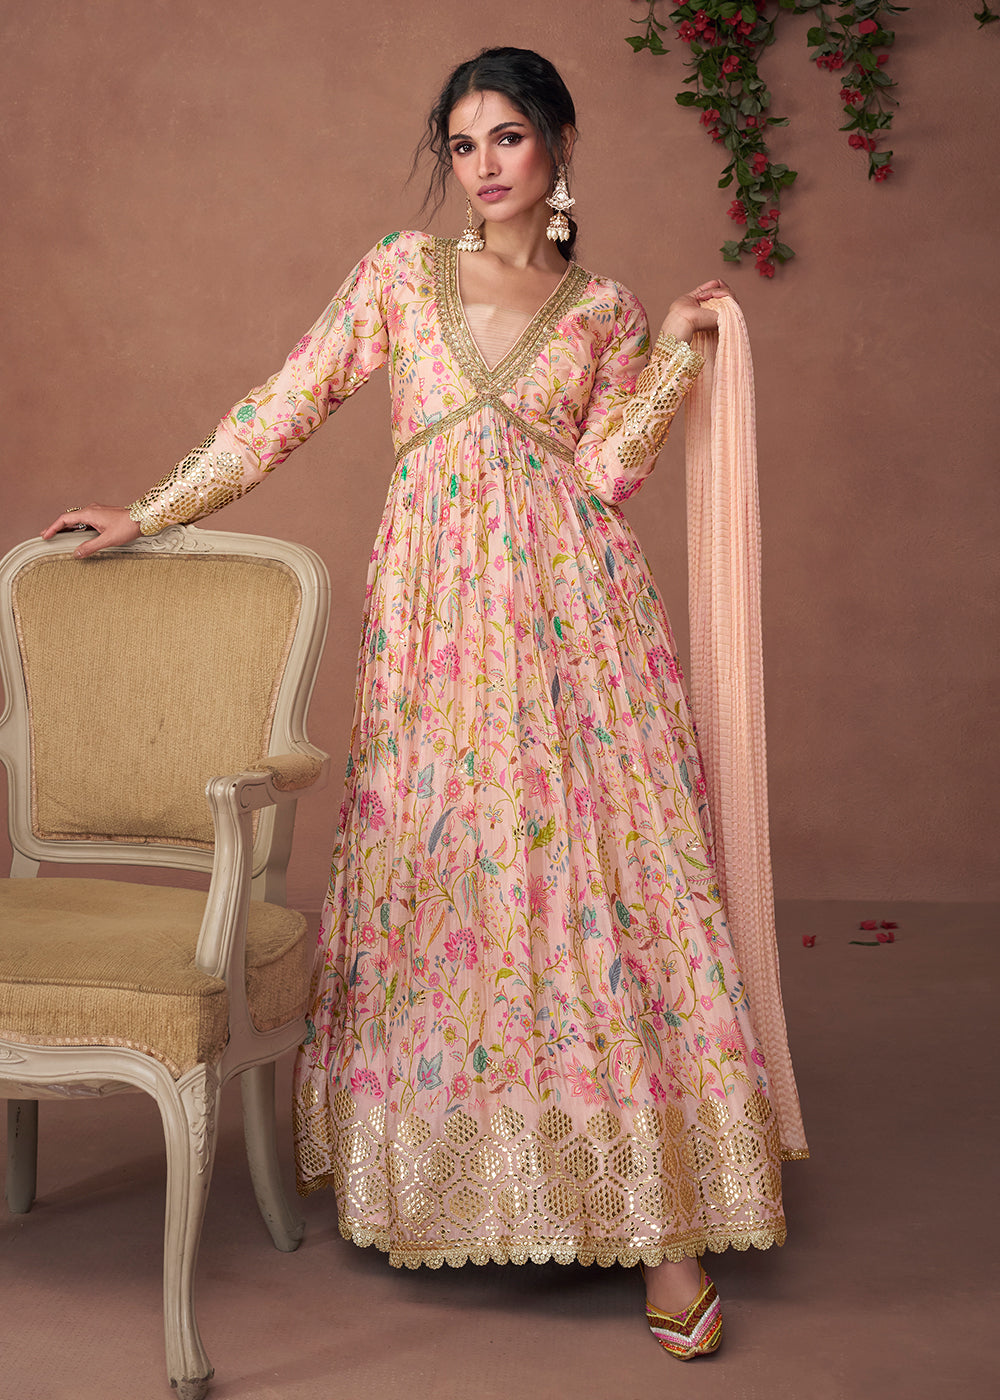 Buy Now Digital Printed Blush Peach Organza Silk Designer Anarkali Gown Online in USA, UK, Australia, Canada & Worldwide at Empress Clothing.